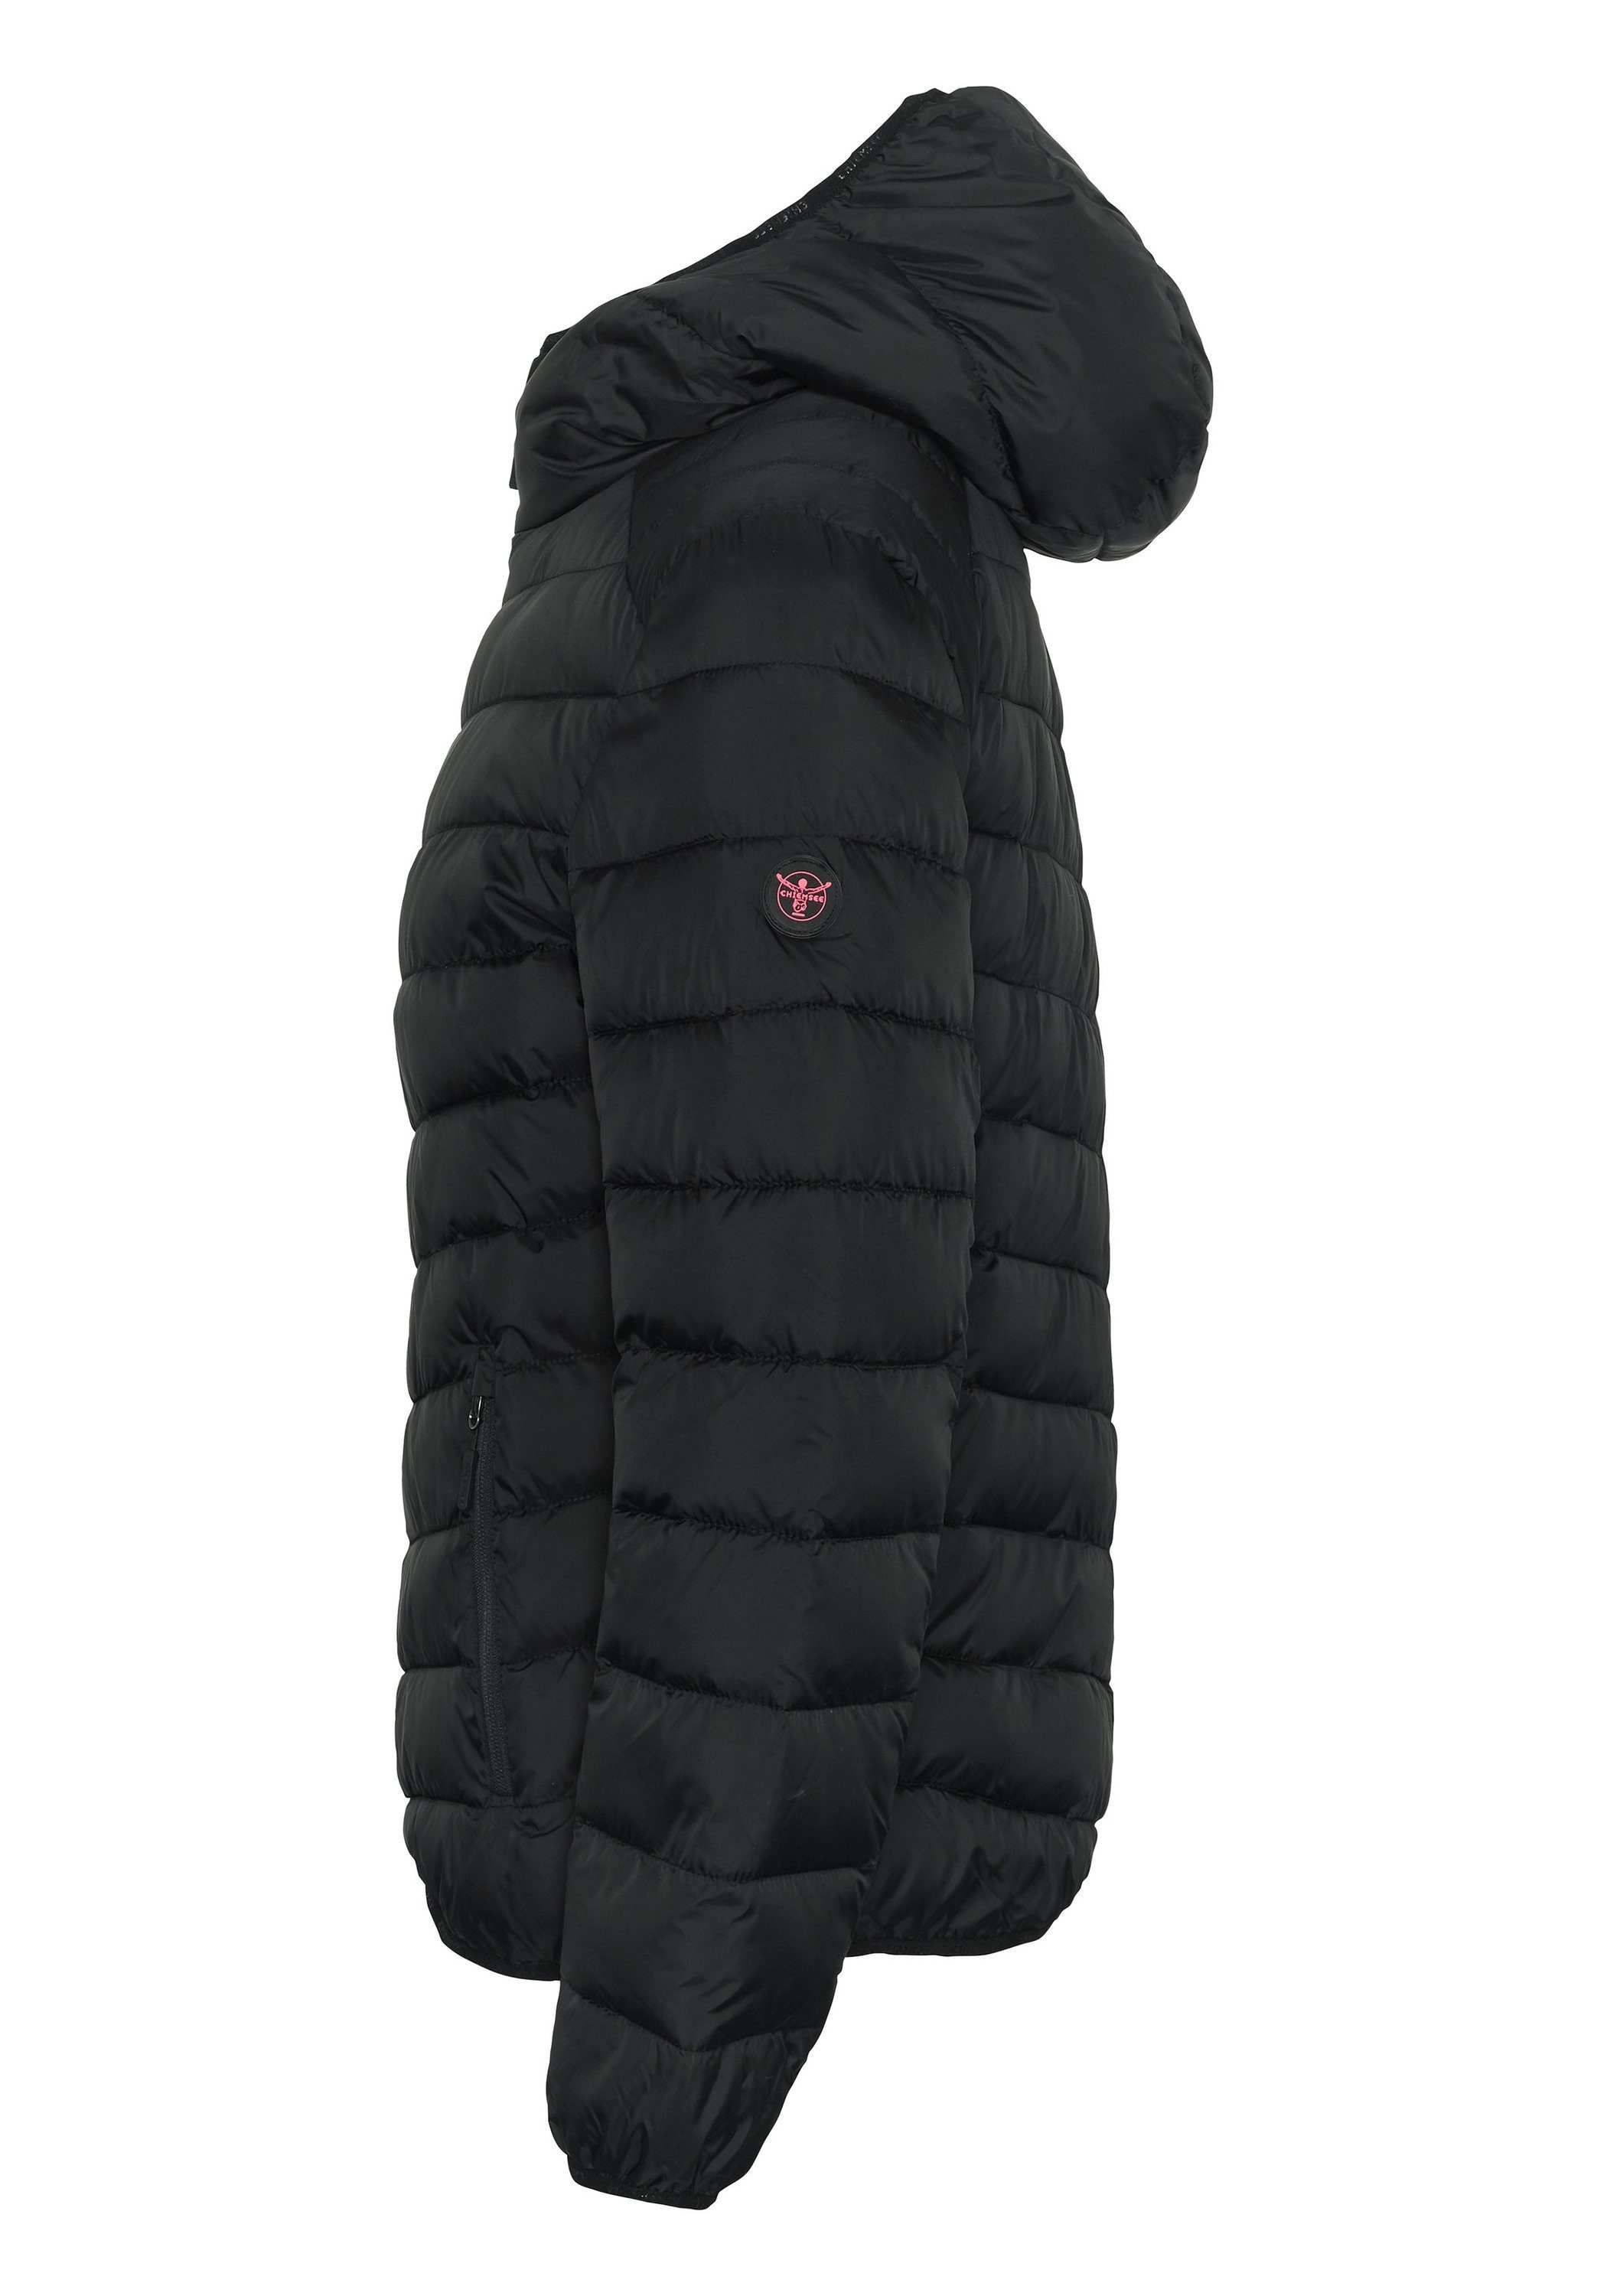 Chiemsee Stepp-Optik schwarz 1 Outdoorjacke Wattierte moderner Jacke in